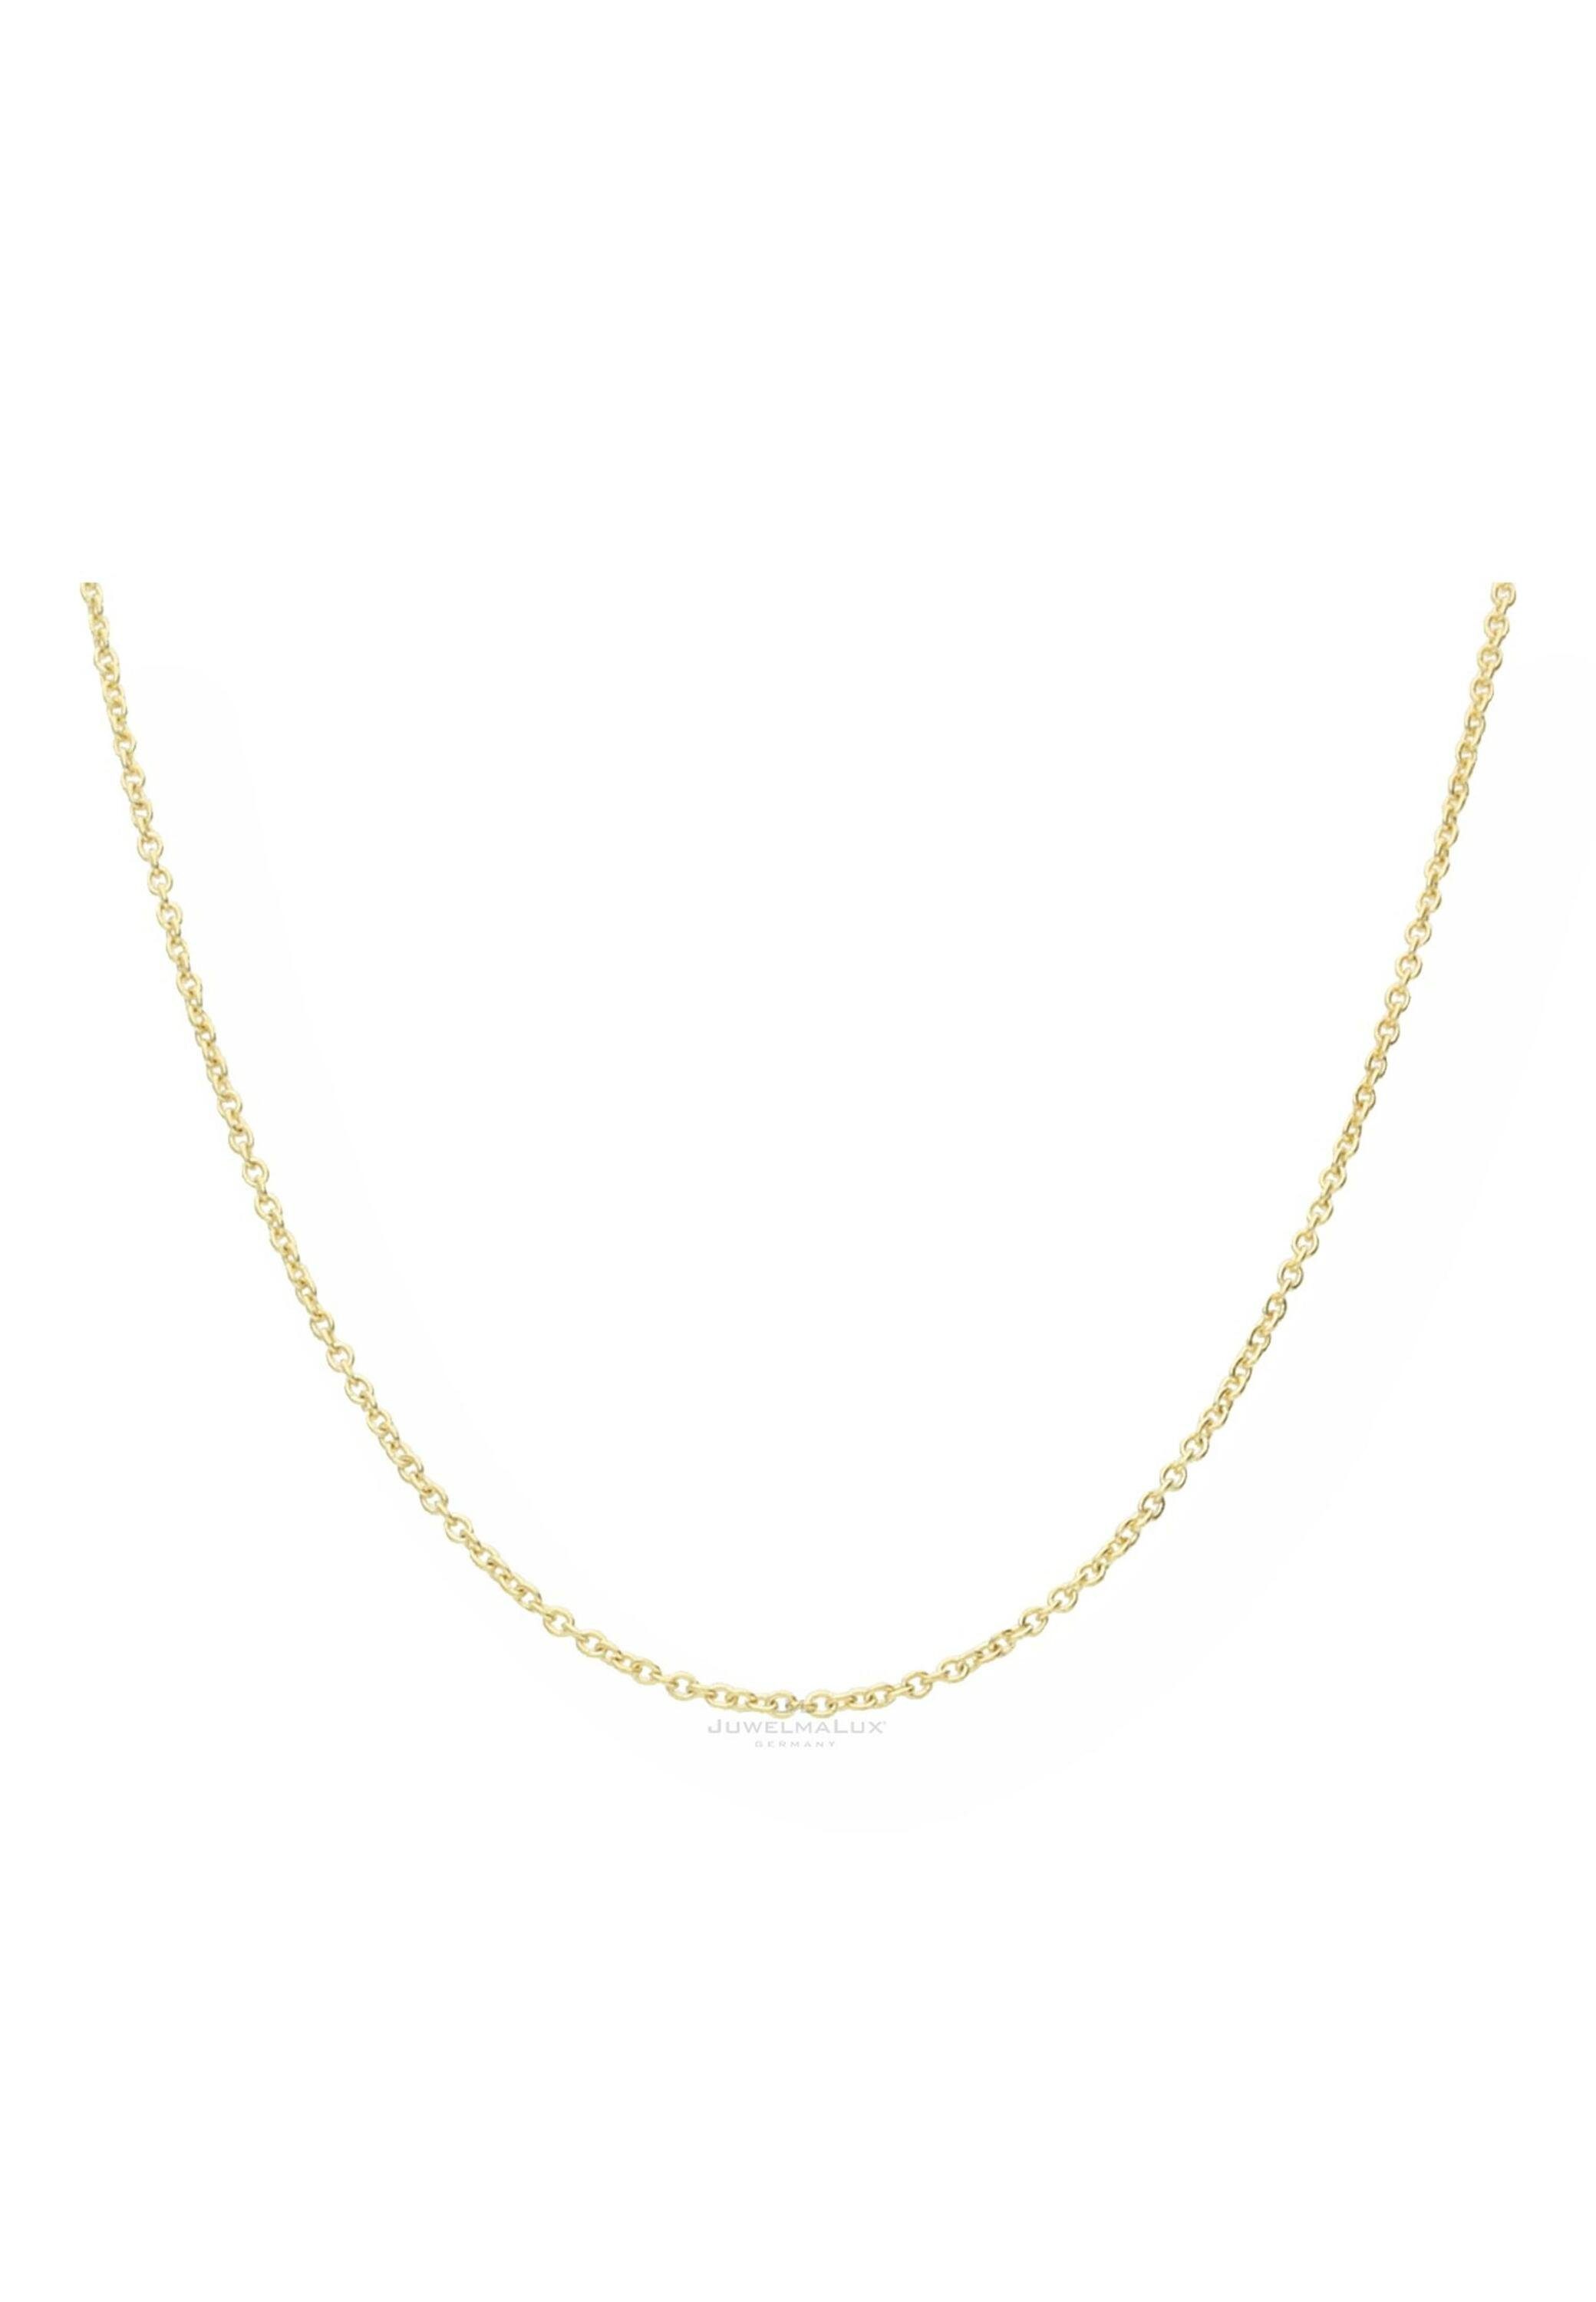 Halskette Goldkette Gold (1-tlg), Halskette JuwelmaLux 333/000, Schmuckschachtel inkl. Damen Gold Ankerkette